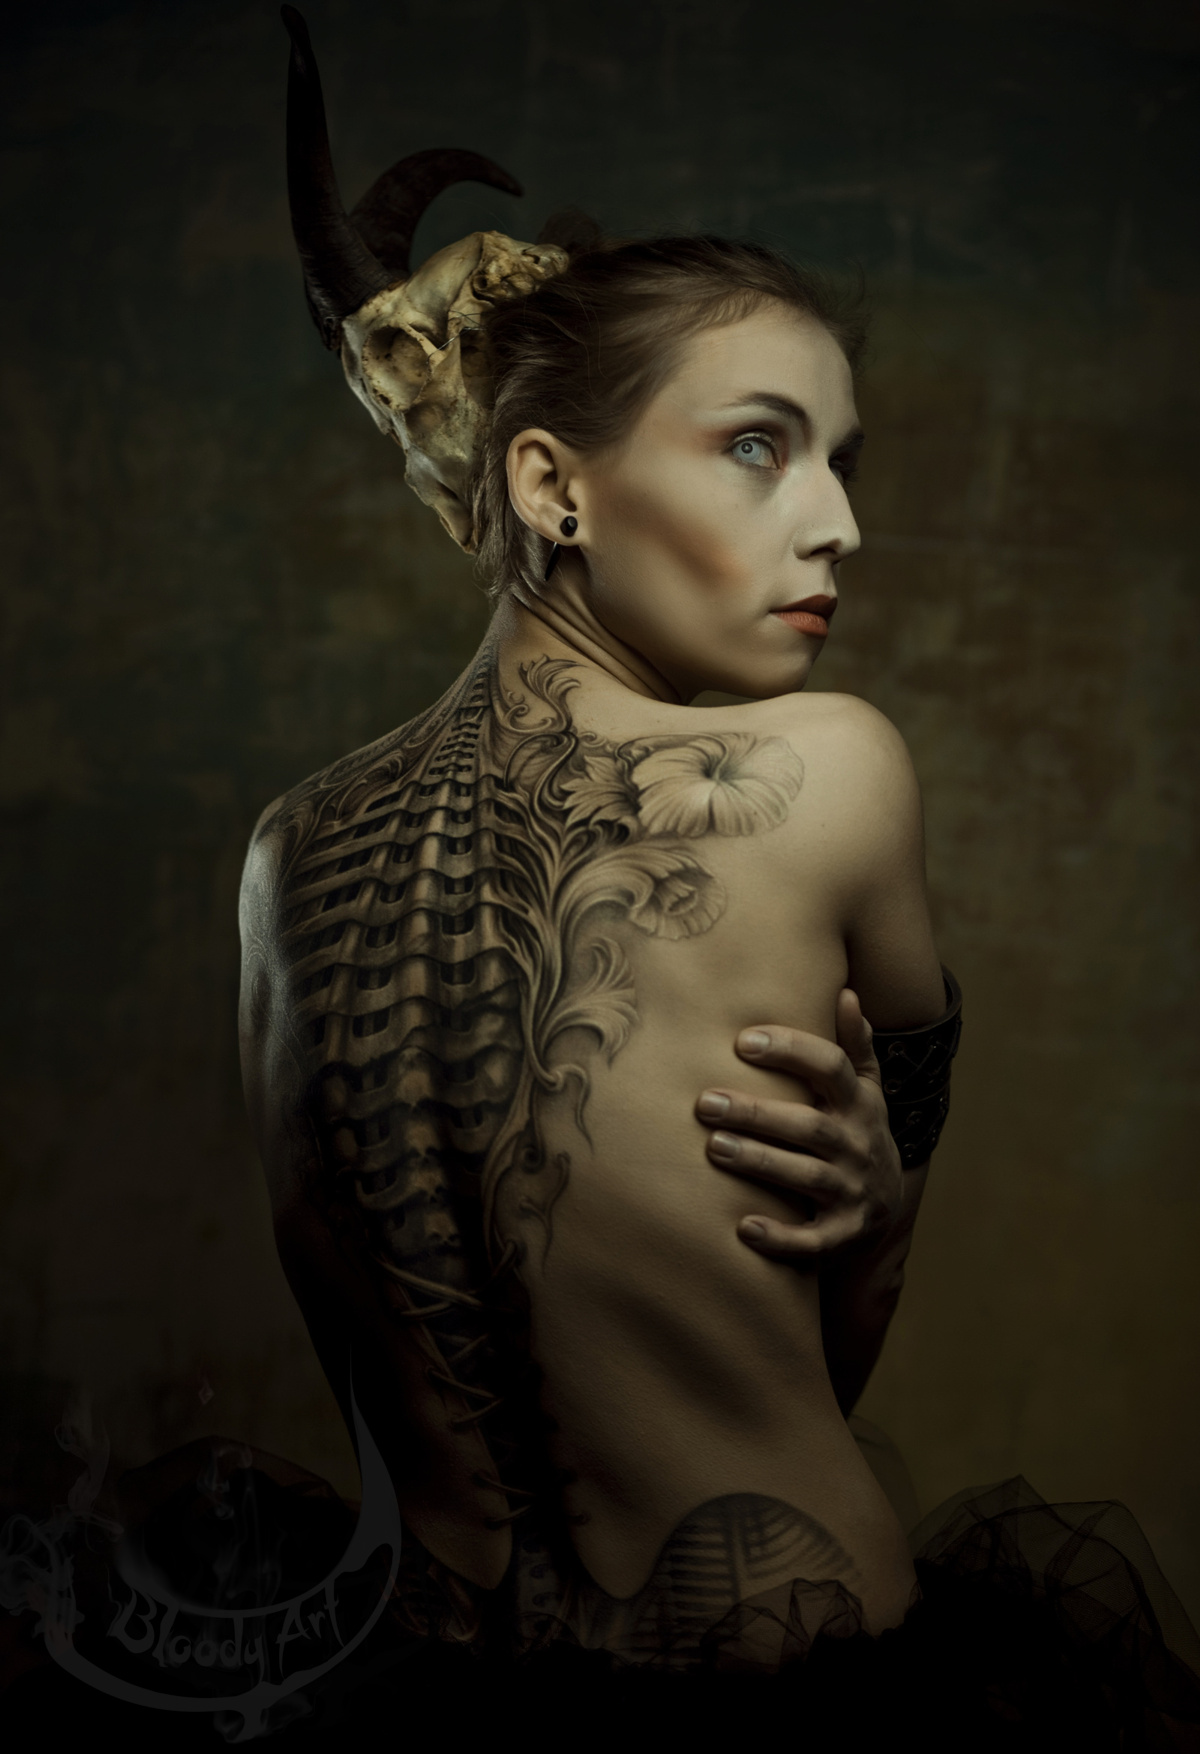 The biomechanic corset tattoo inspired by HR Giger artworks, Author: Sebastian Żmijewski, Model: Milena Żmijewska